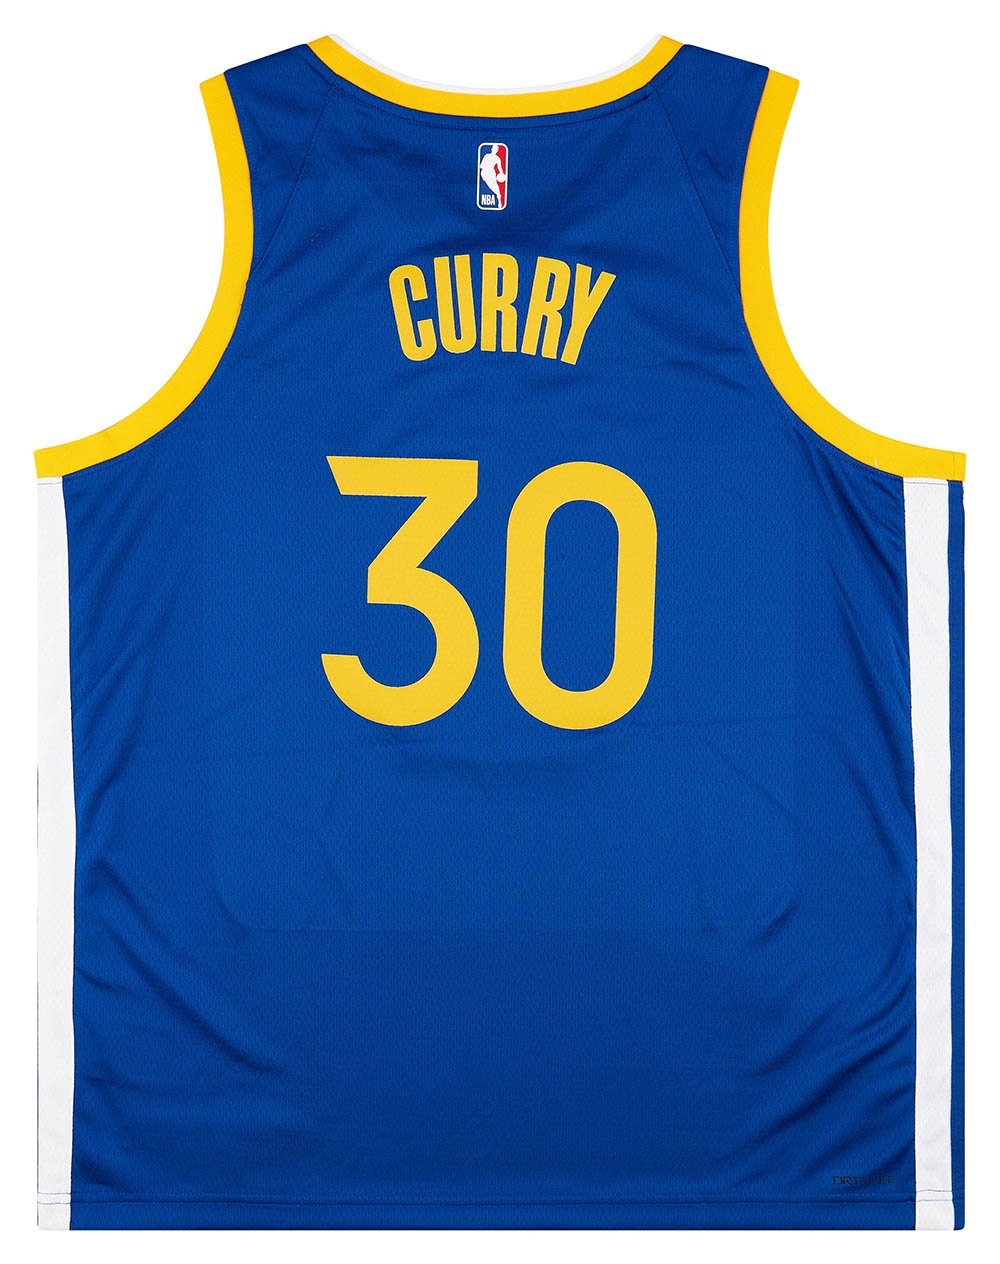 2017-23 Golden State Warriors Curry #30 Nike Swingman Away Jersey (M)